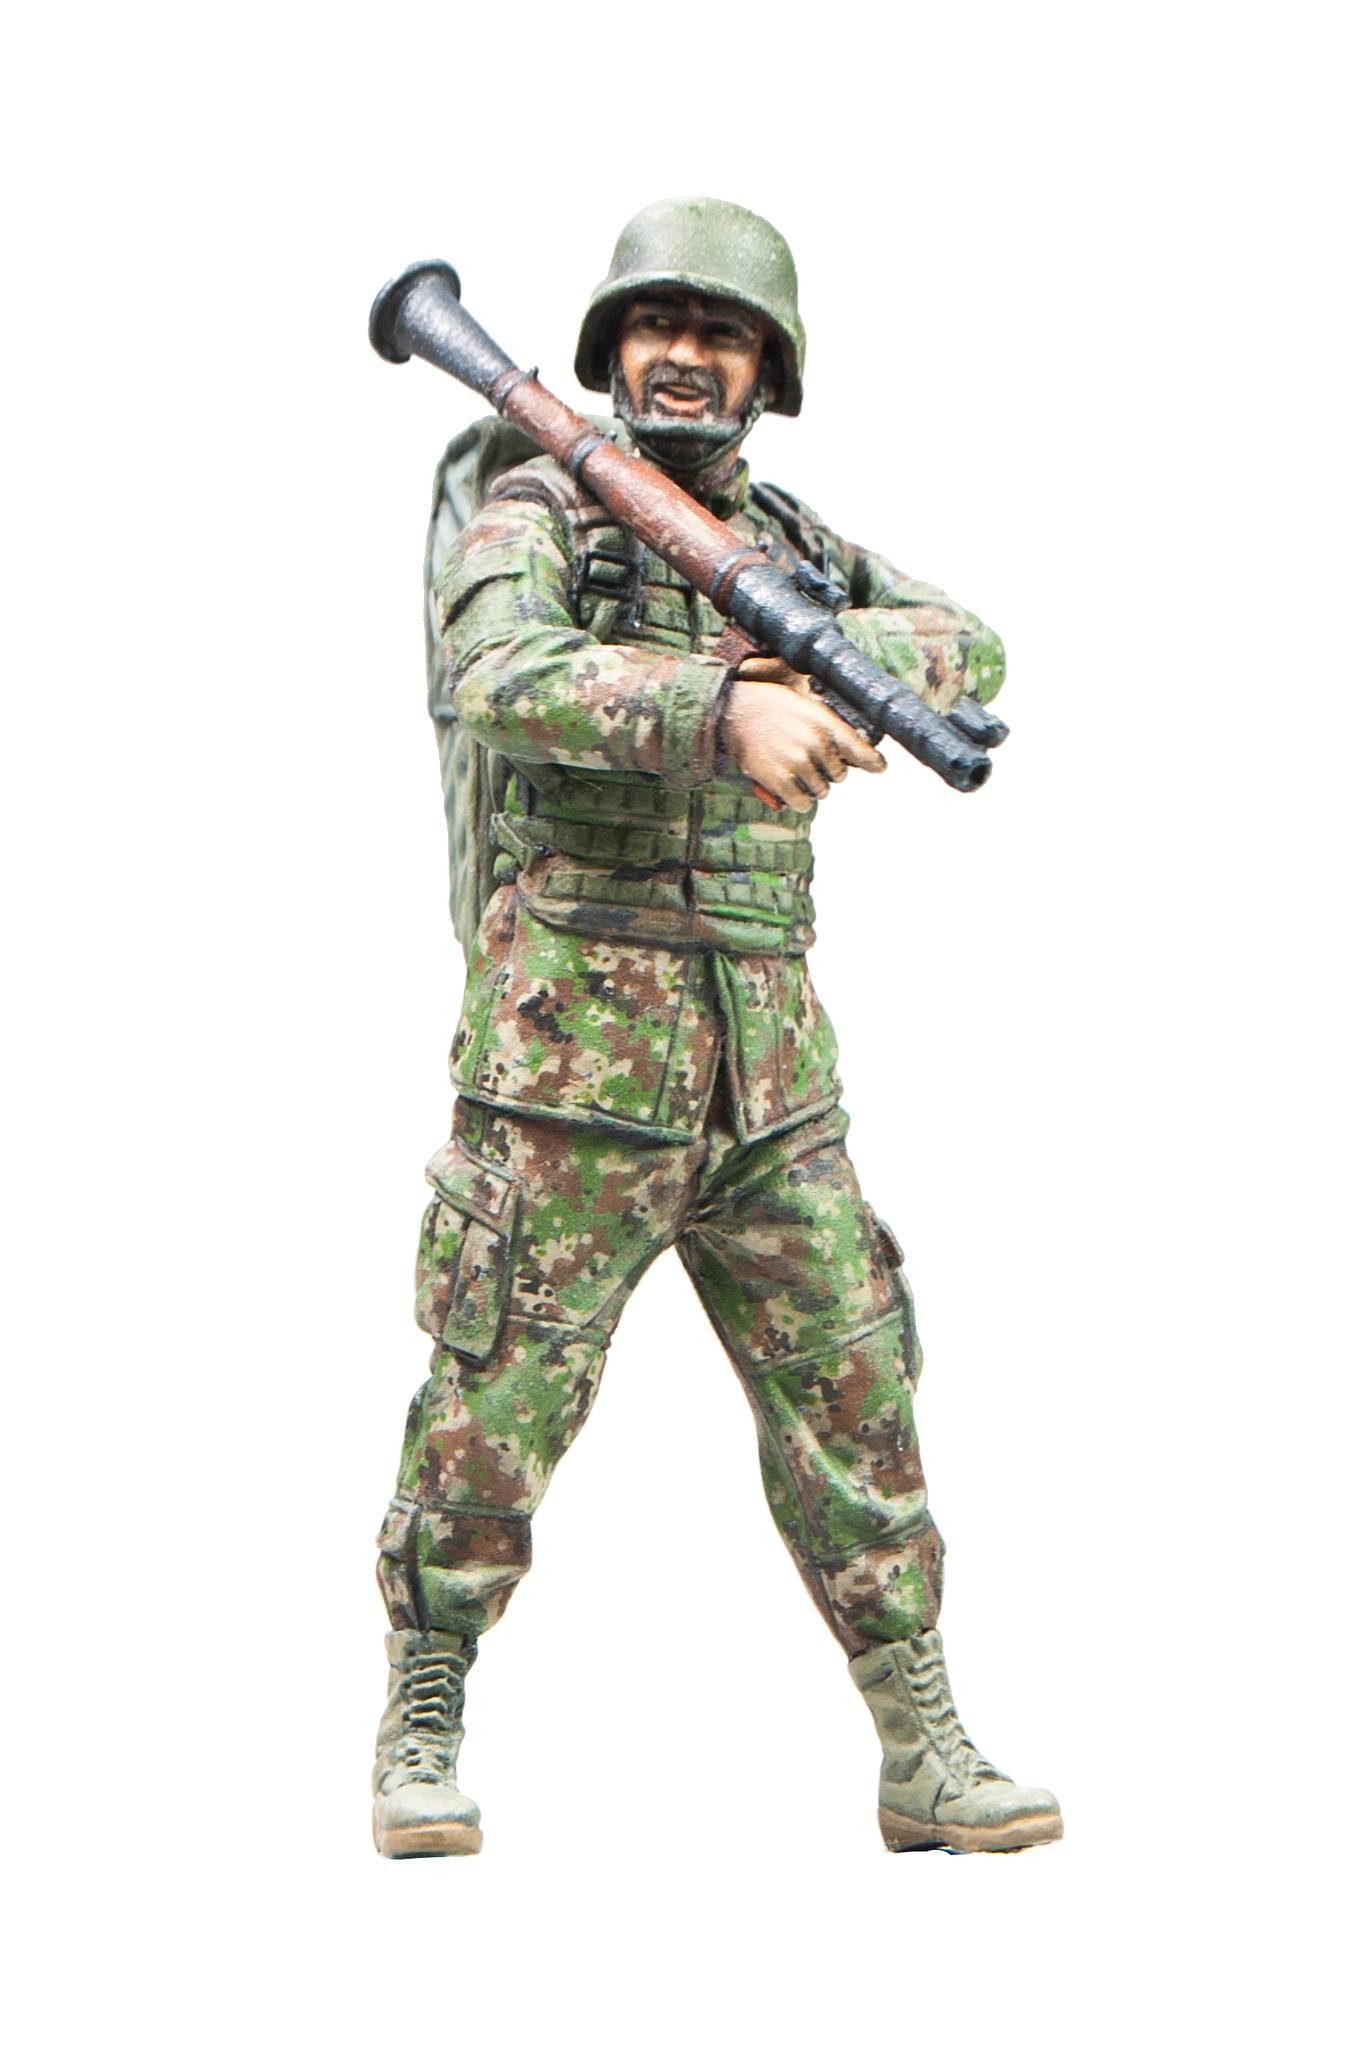 HF769 1/35 ANA soldier w/RPG -1 figure